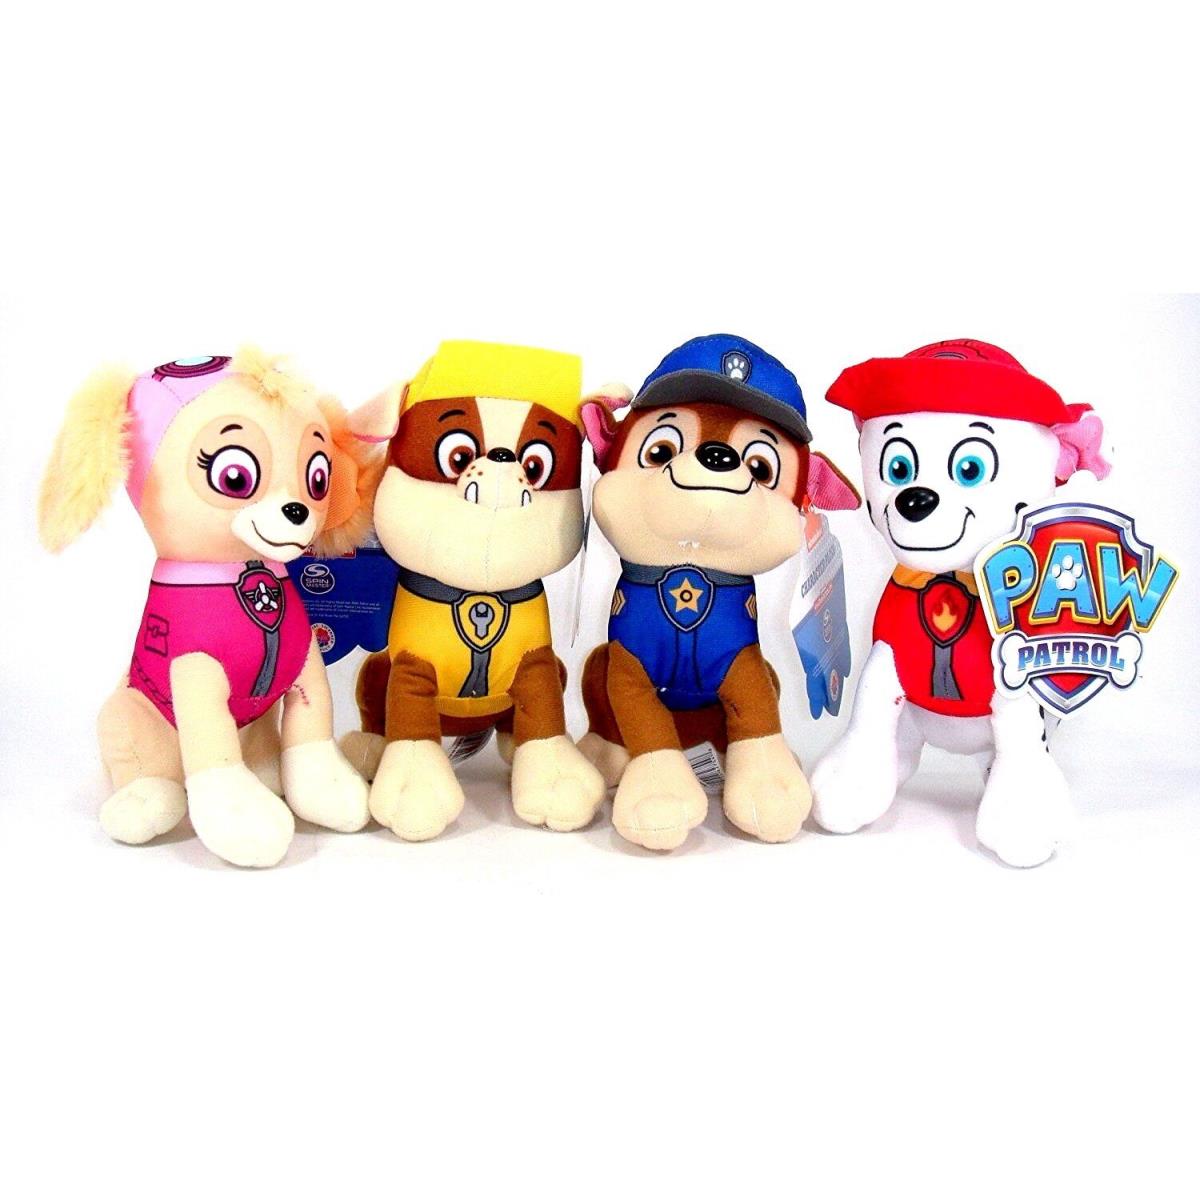 8 Paw Patrol Plush Stuffed Animal Toy Set: Chase Rubble Marshall Skye